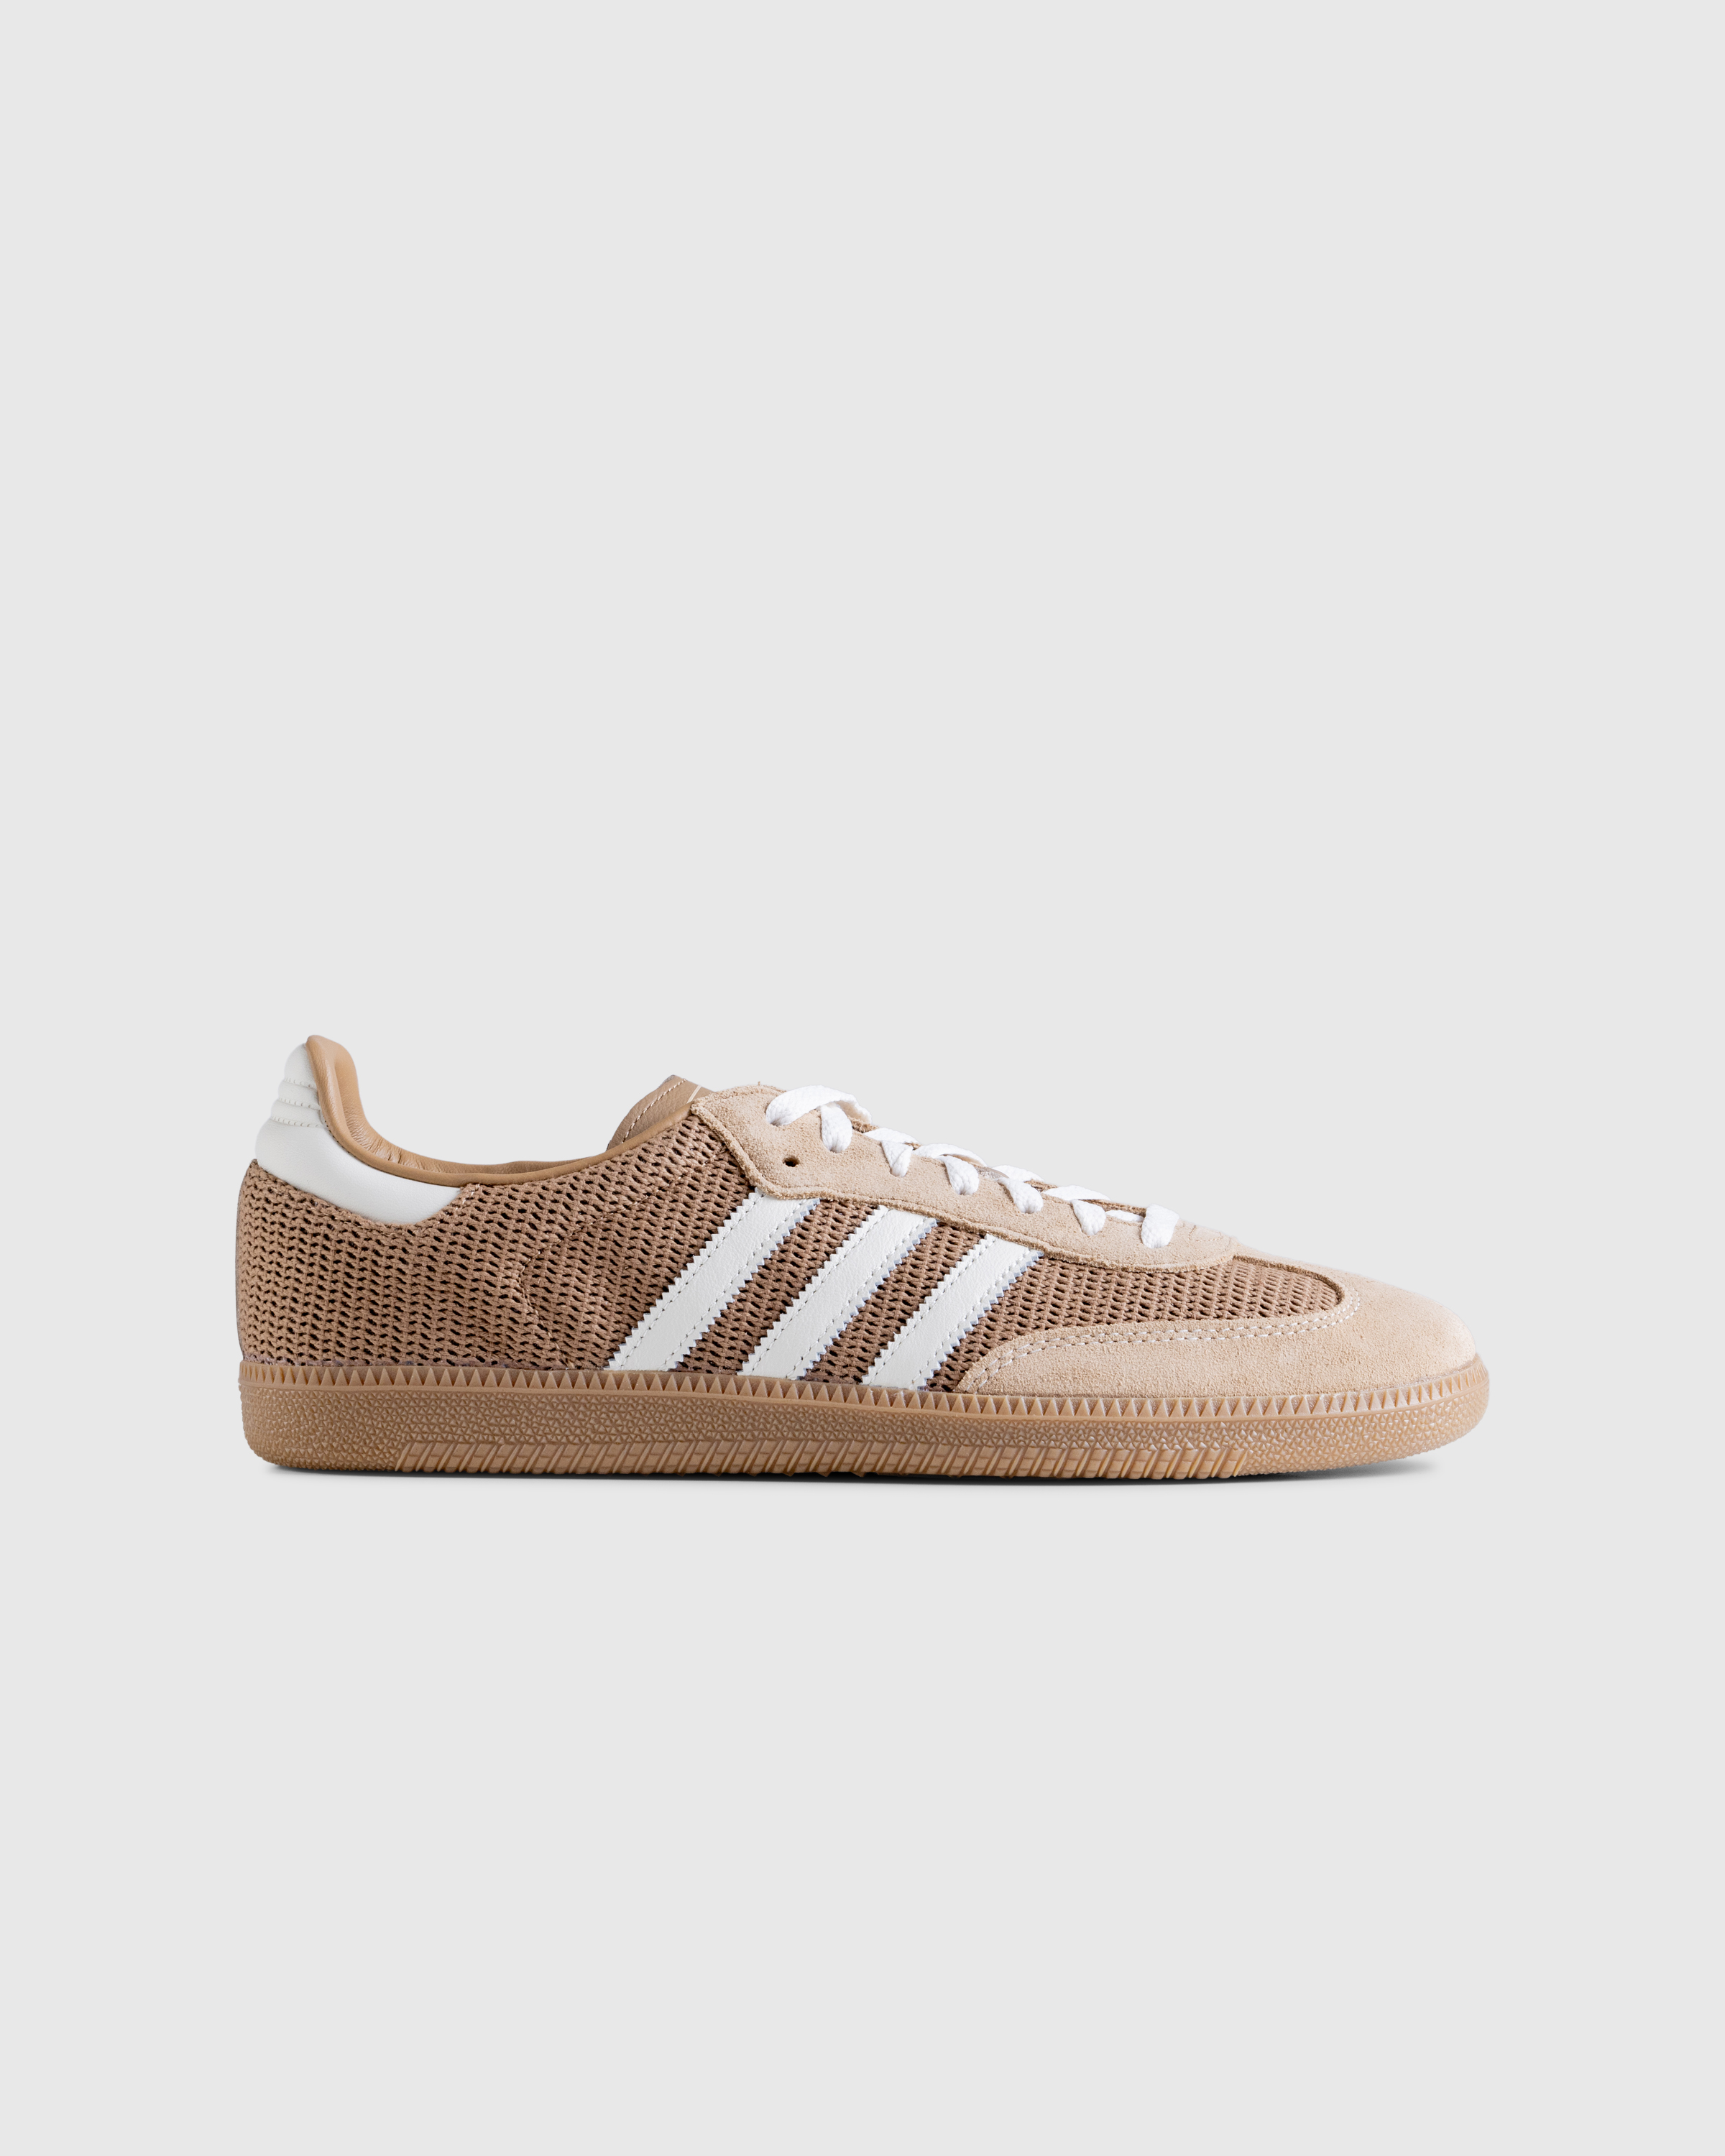 Adidas – Samba OG Cardboard - Sneakers - Brown - Image 1